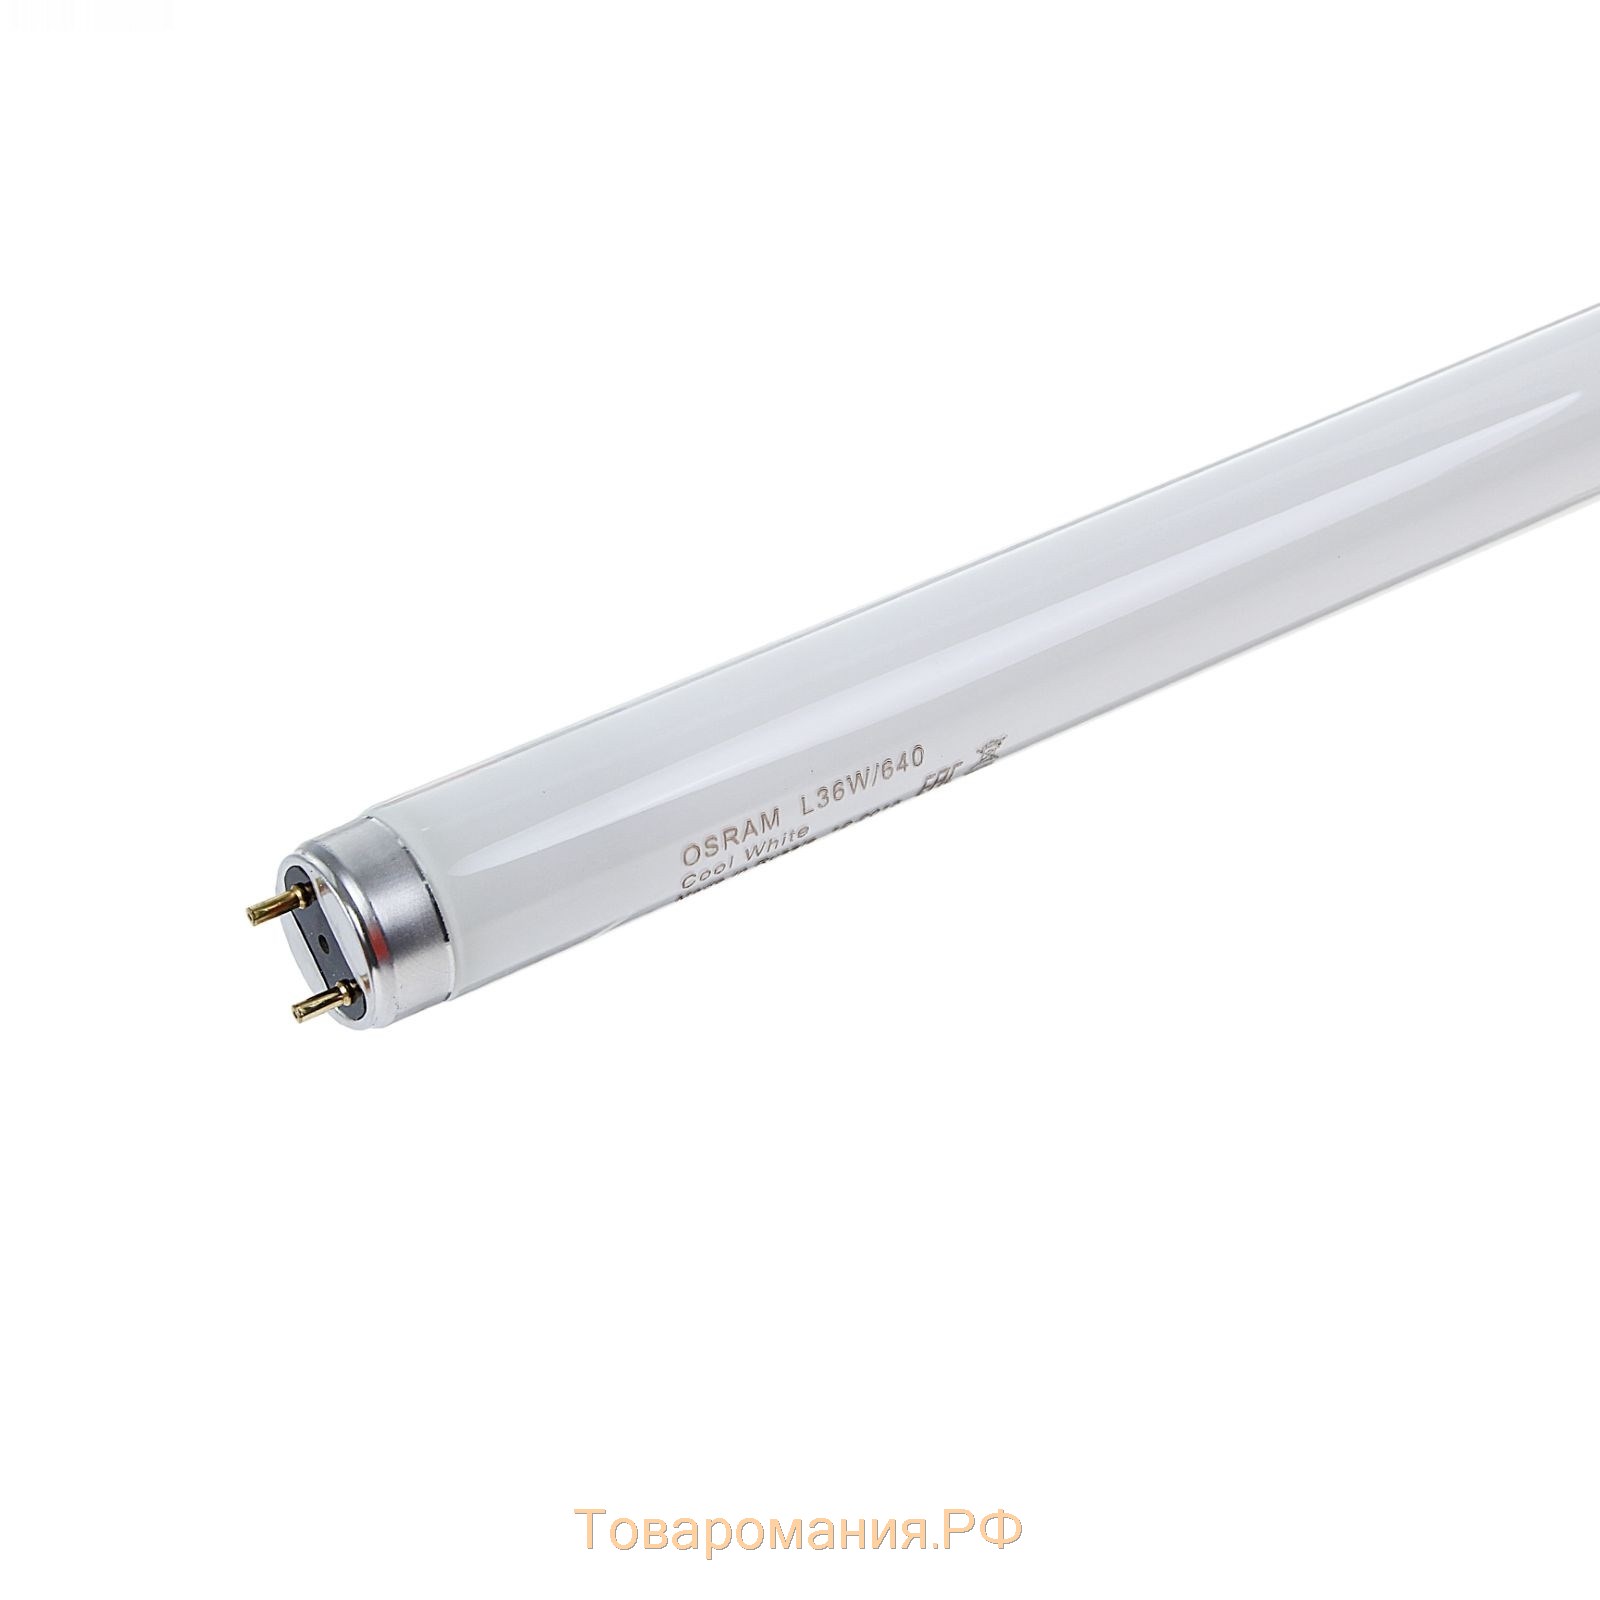 Лампа люминесцентная Osram L 36W/640, G13, 36 Вт, 4000 К, 1200 мм